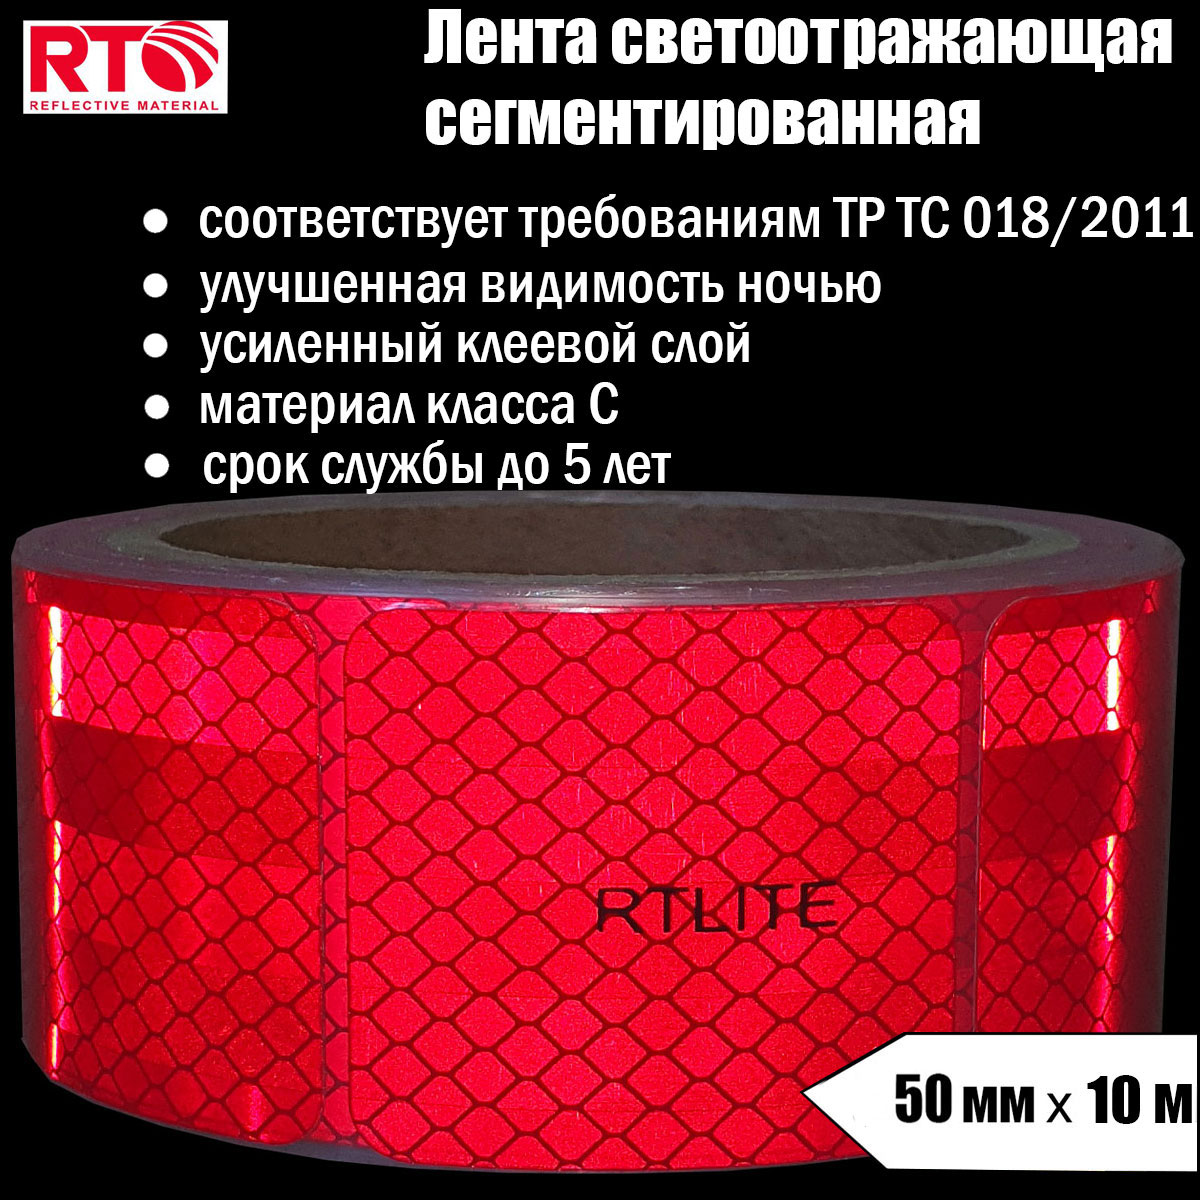 Лента светоотражающая сегментированная RTLITE RT-V104 для контурной маркировки, 50мм х 10м лента светоотражающая для контурной маркировки rtlite rt v104 50 8 мм х 5 м желтая